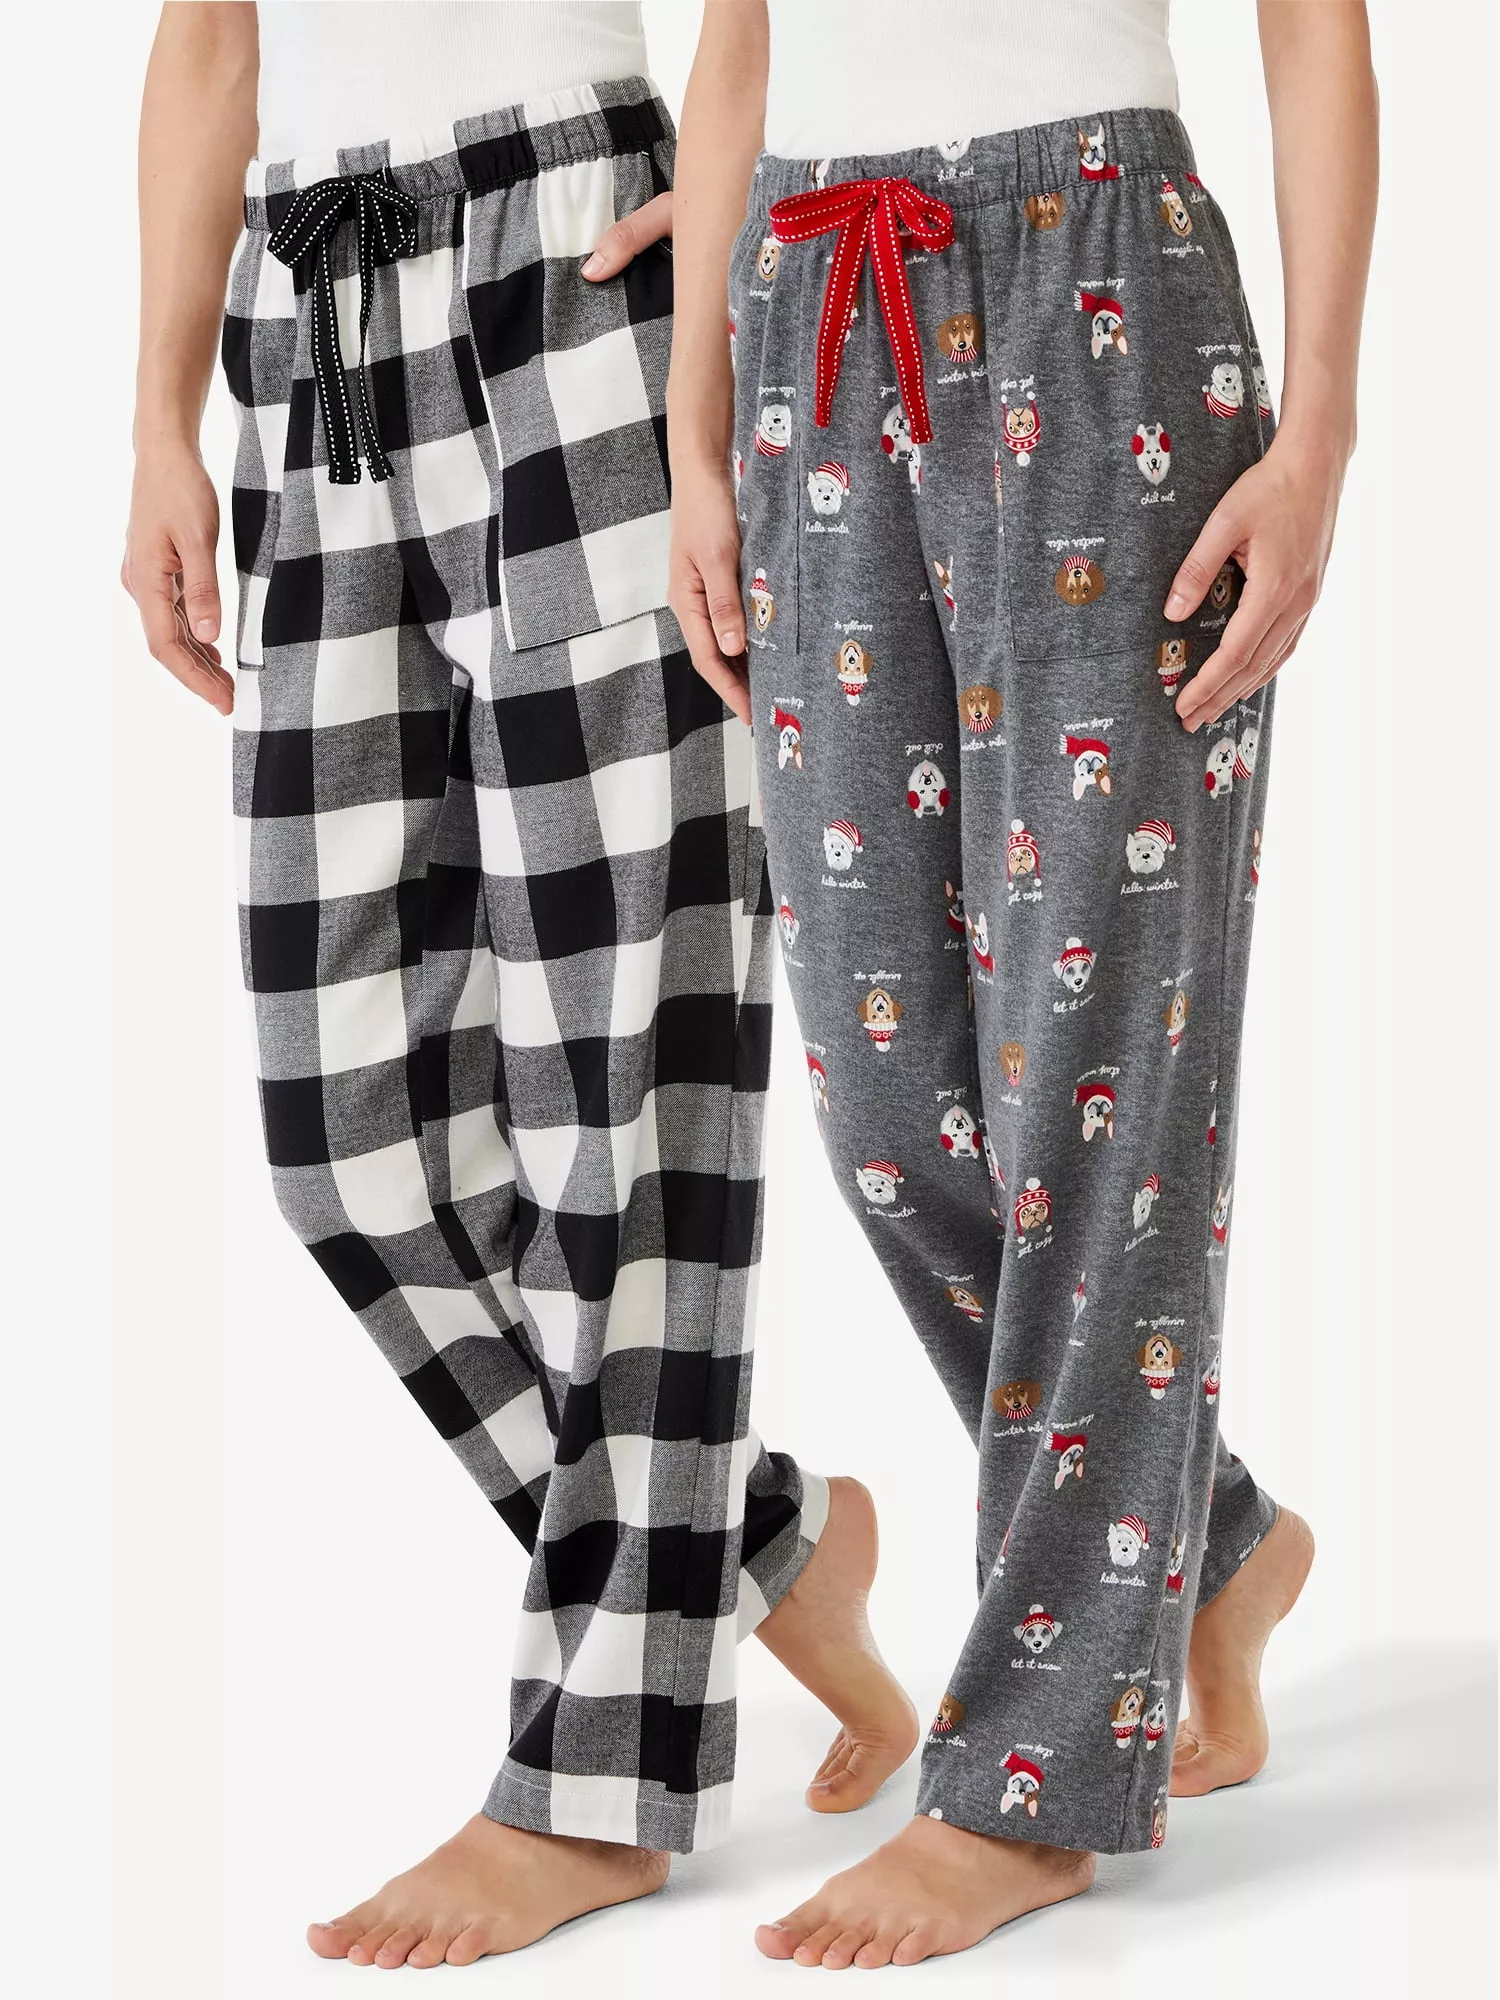 Team Flannel Pajama Pants (Women's) – Madlax